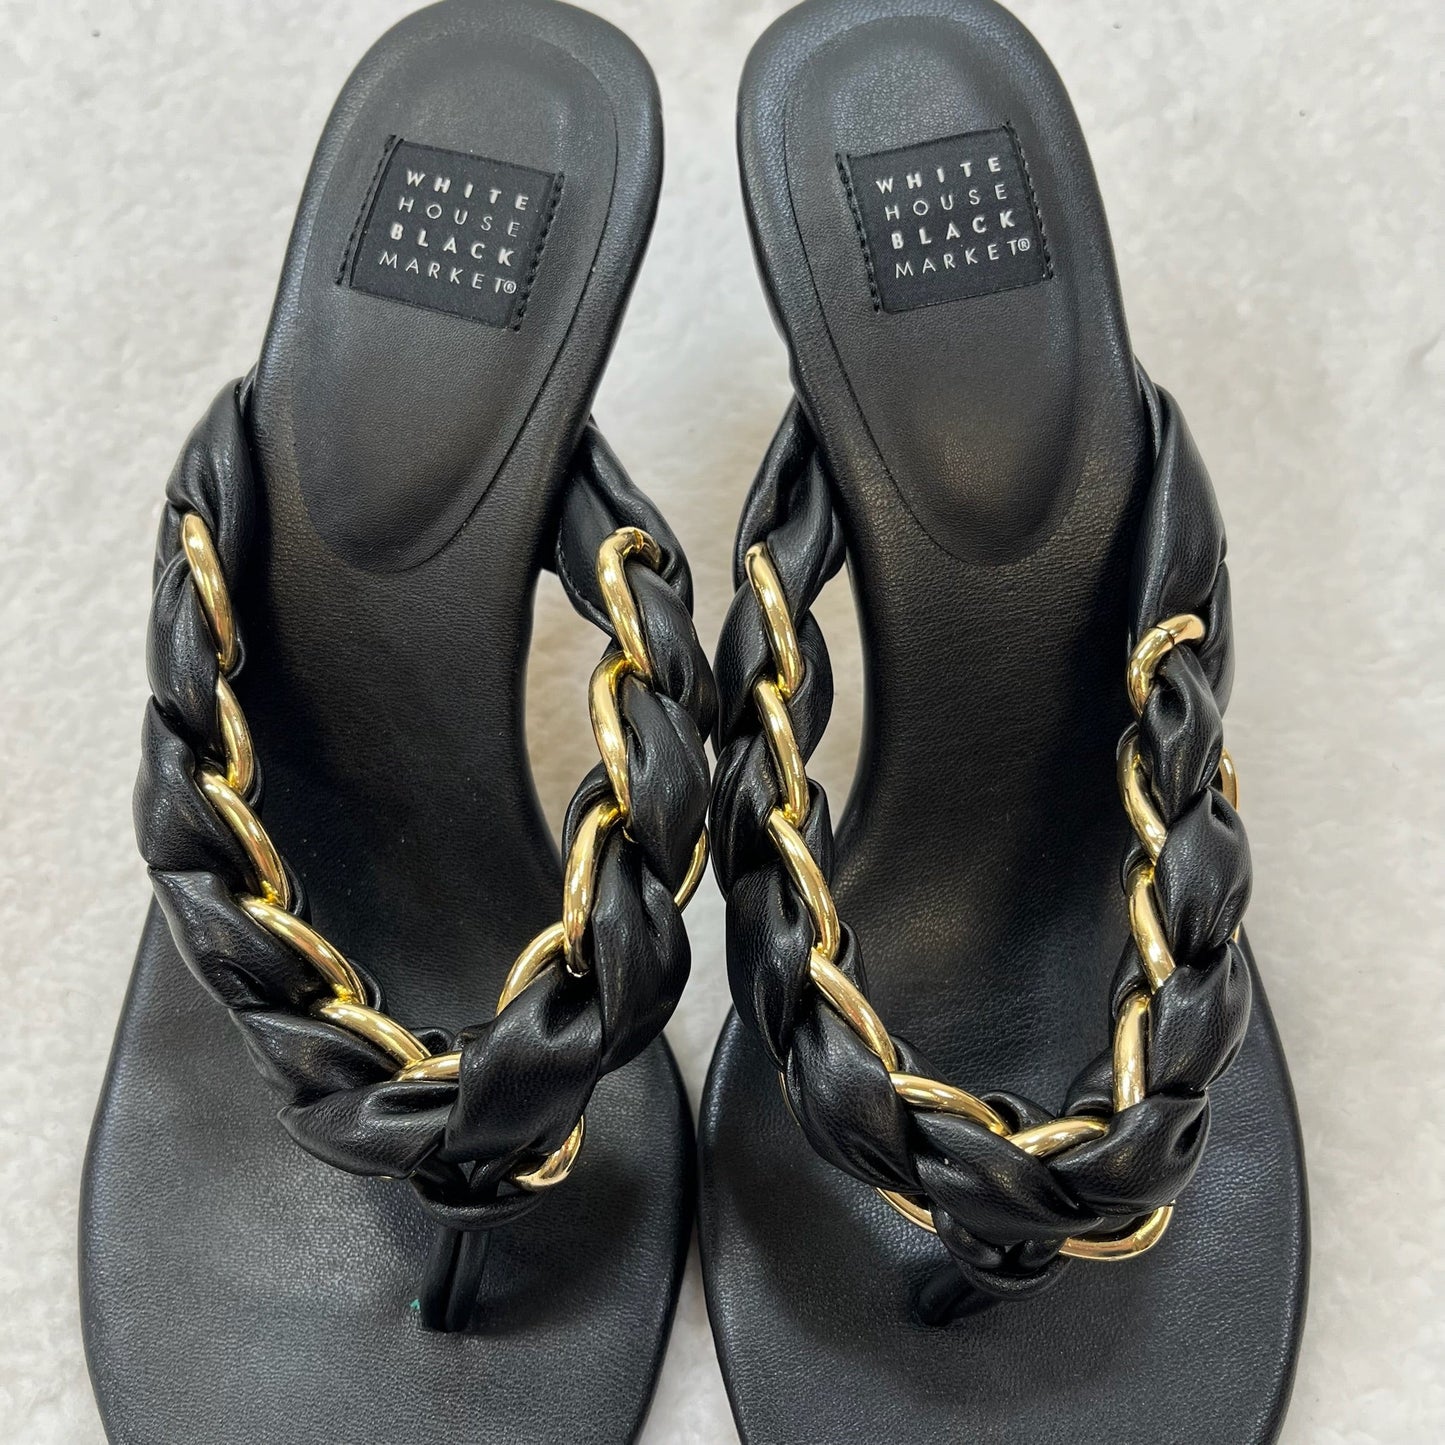 Sandals Flip Flops White House Black Market O, Size 7.5